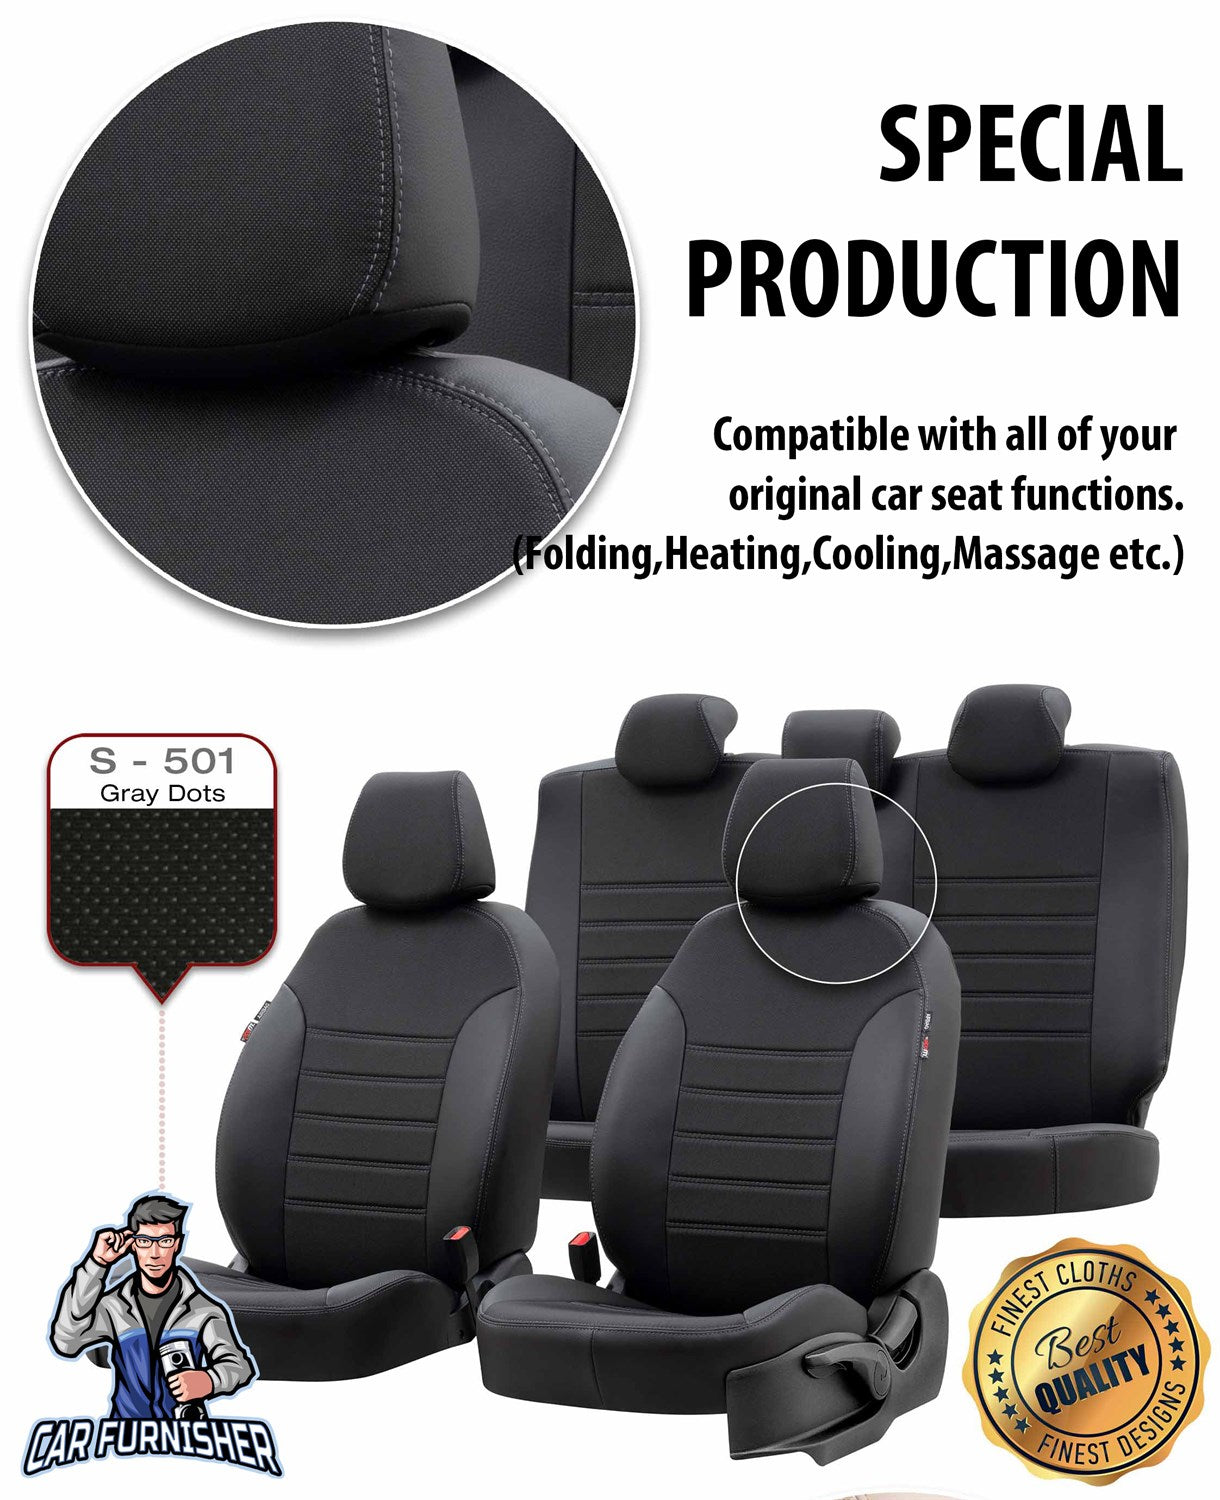 Fiat Stilo Seat Covers Paris Leather & Jacquard Design Dark Beige Leather & Jacquard Fabric